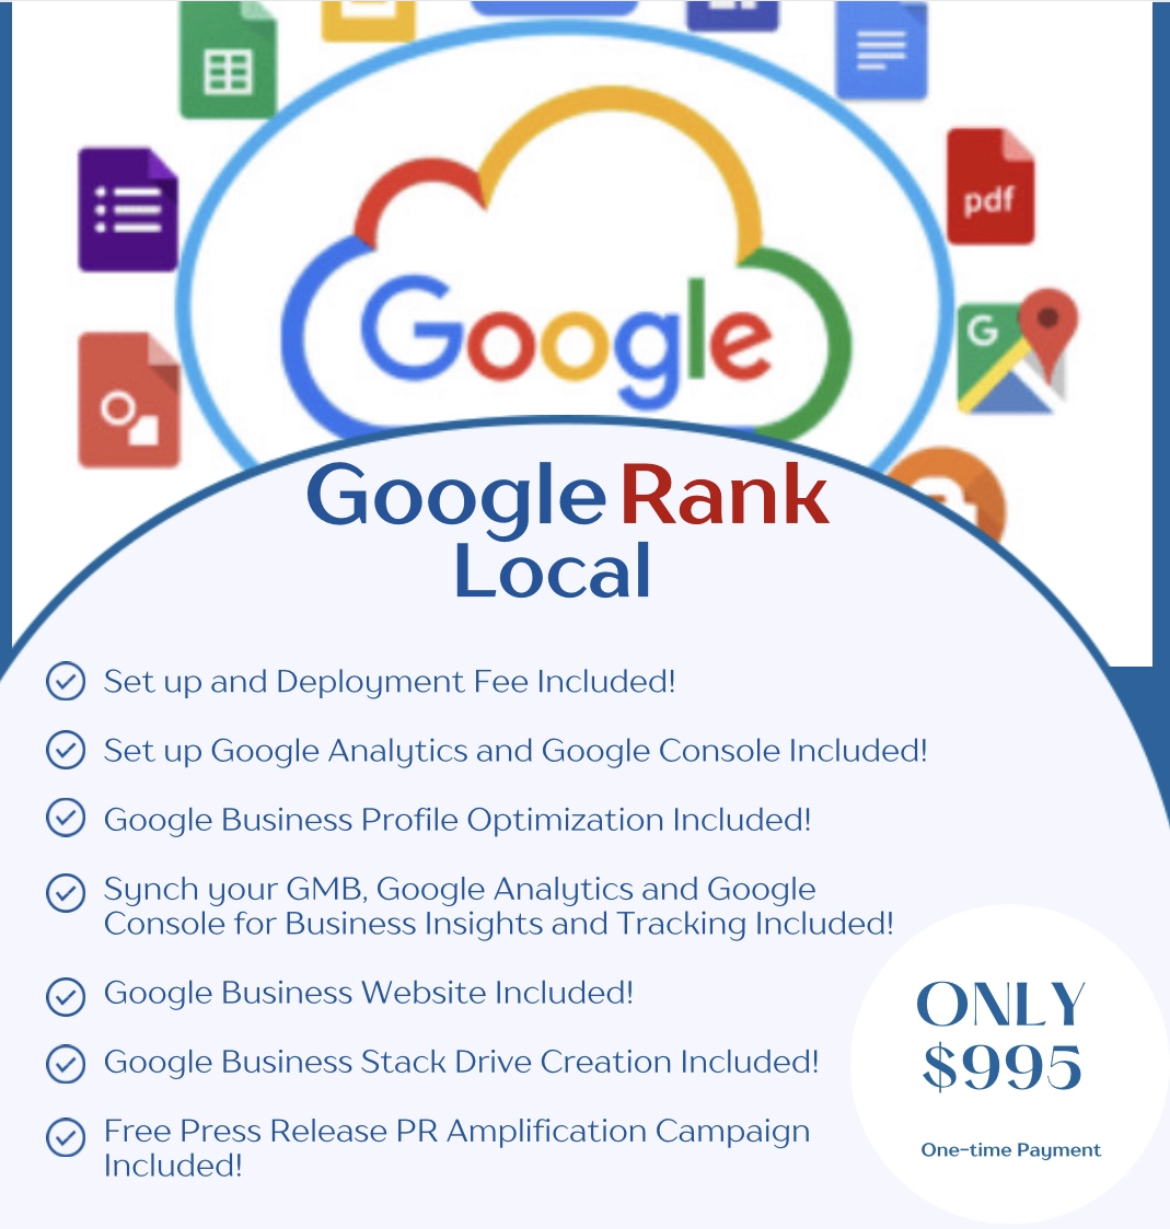 Google Rank Local Pricing Long Island, NY